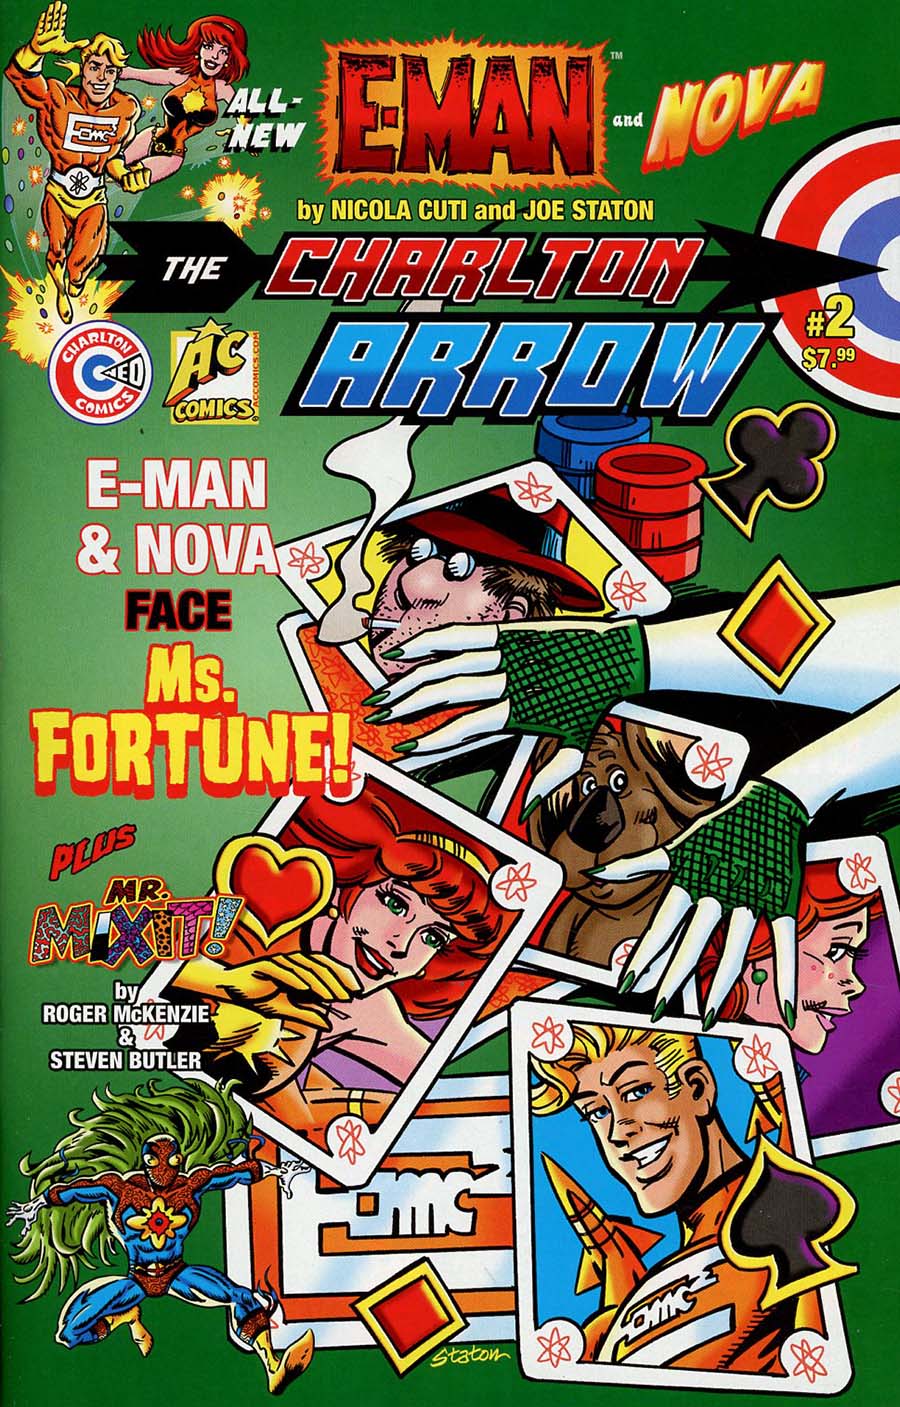 Charlton Arrow #2 Cover B Joe Staton E-Man